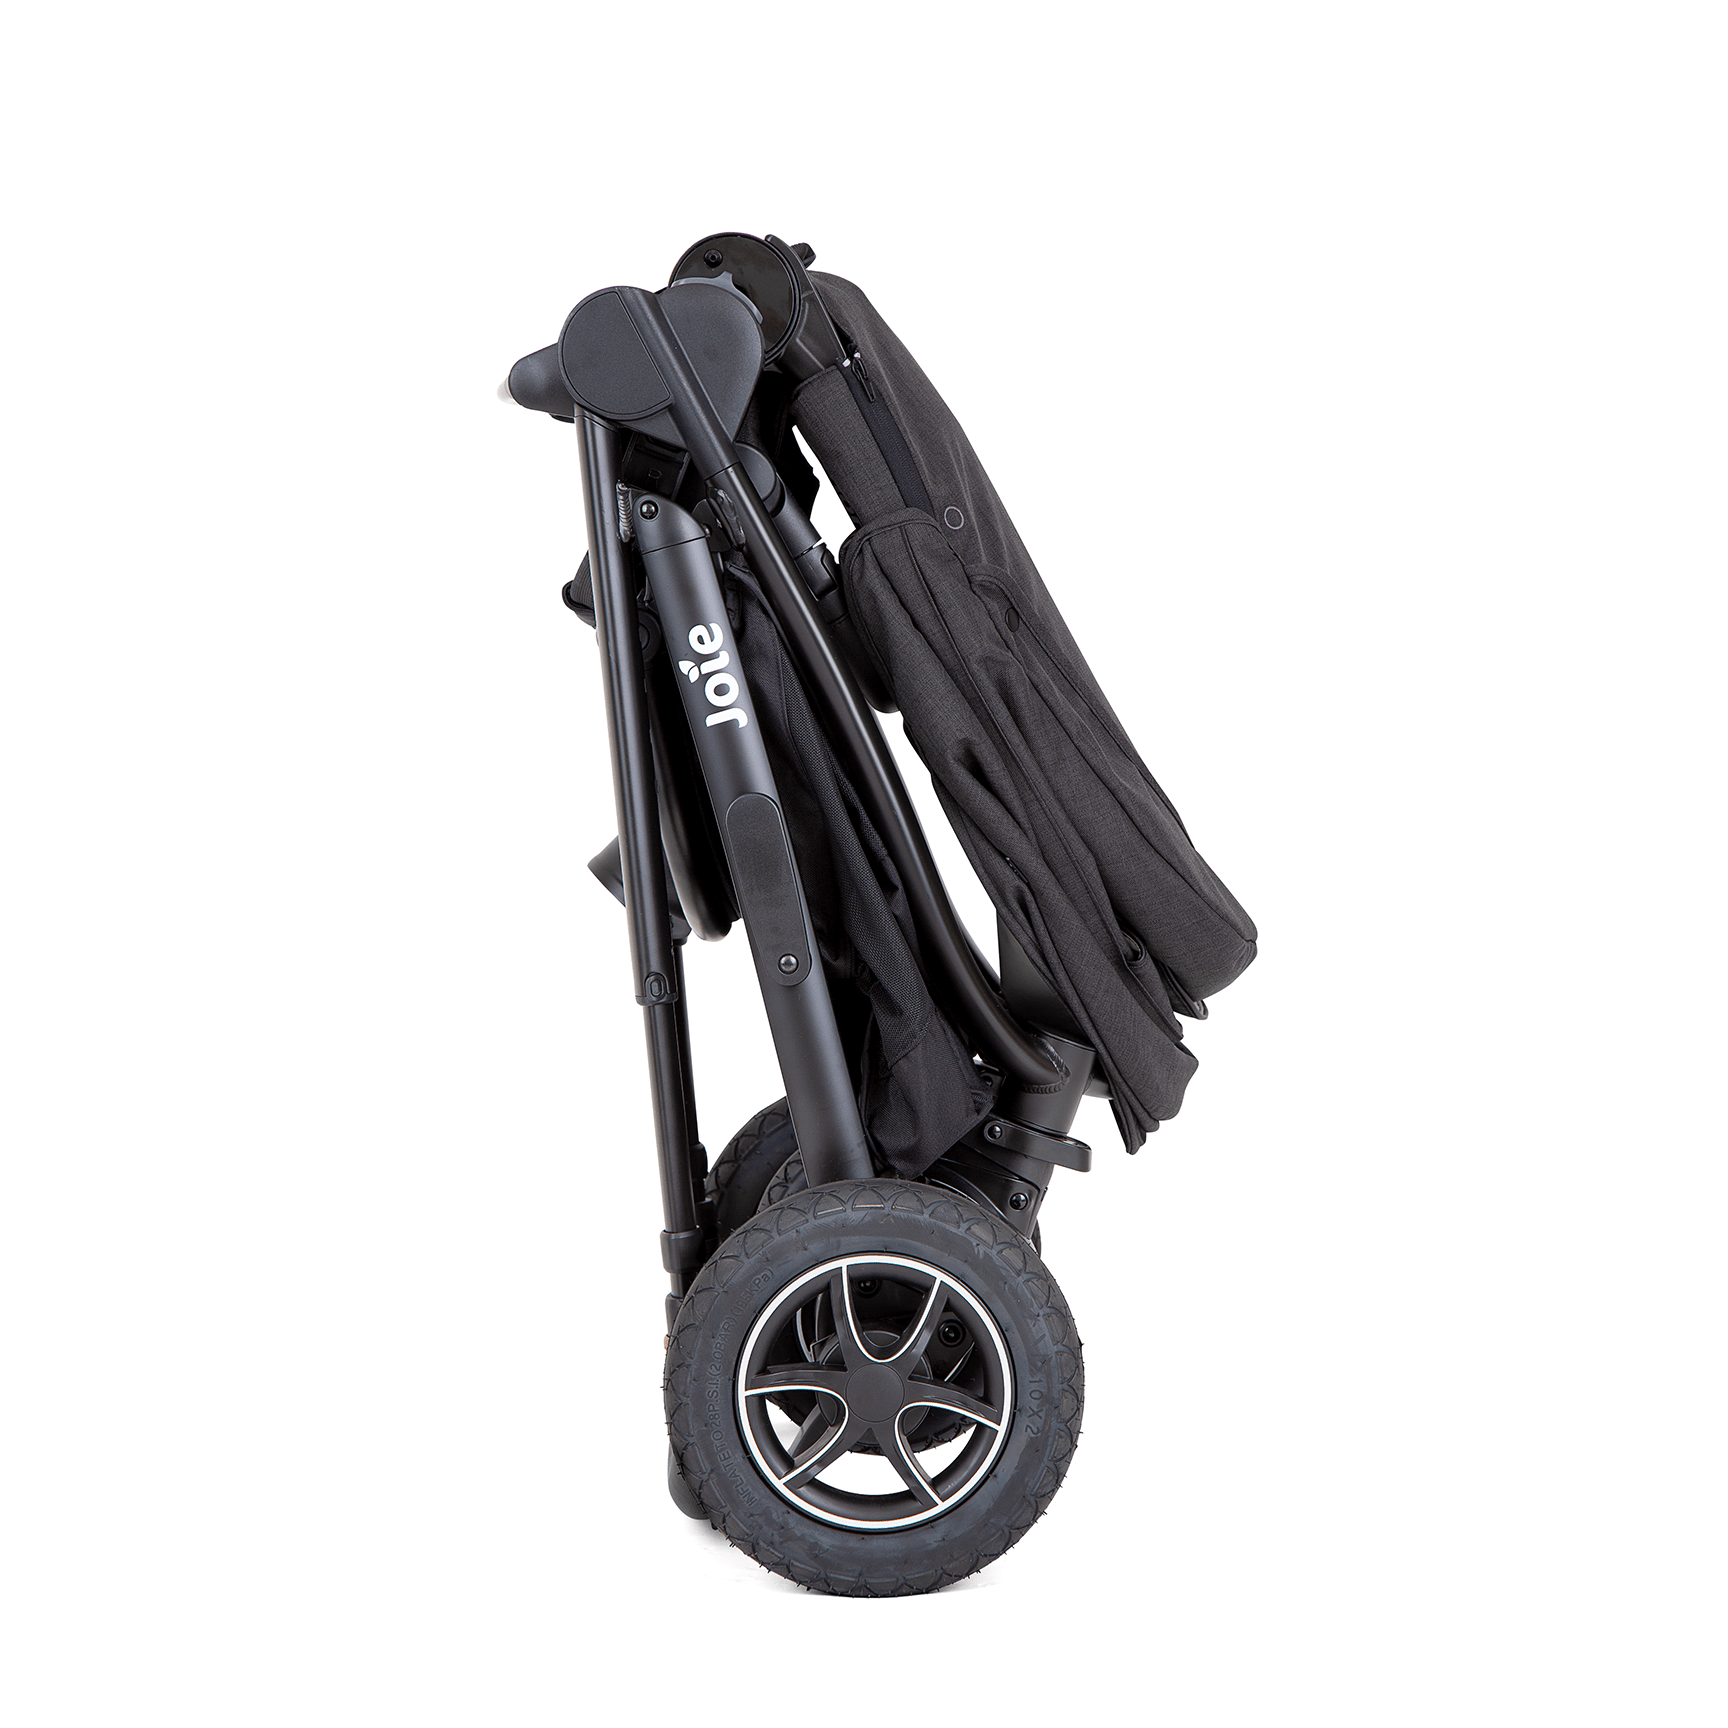 Joie Versatrax Stroller in Shale Pushchairs & Buggies S1803EASHA000 5056080615219